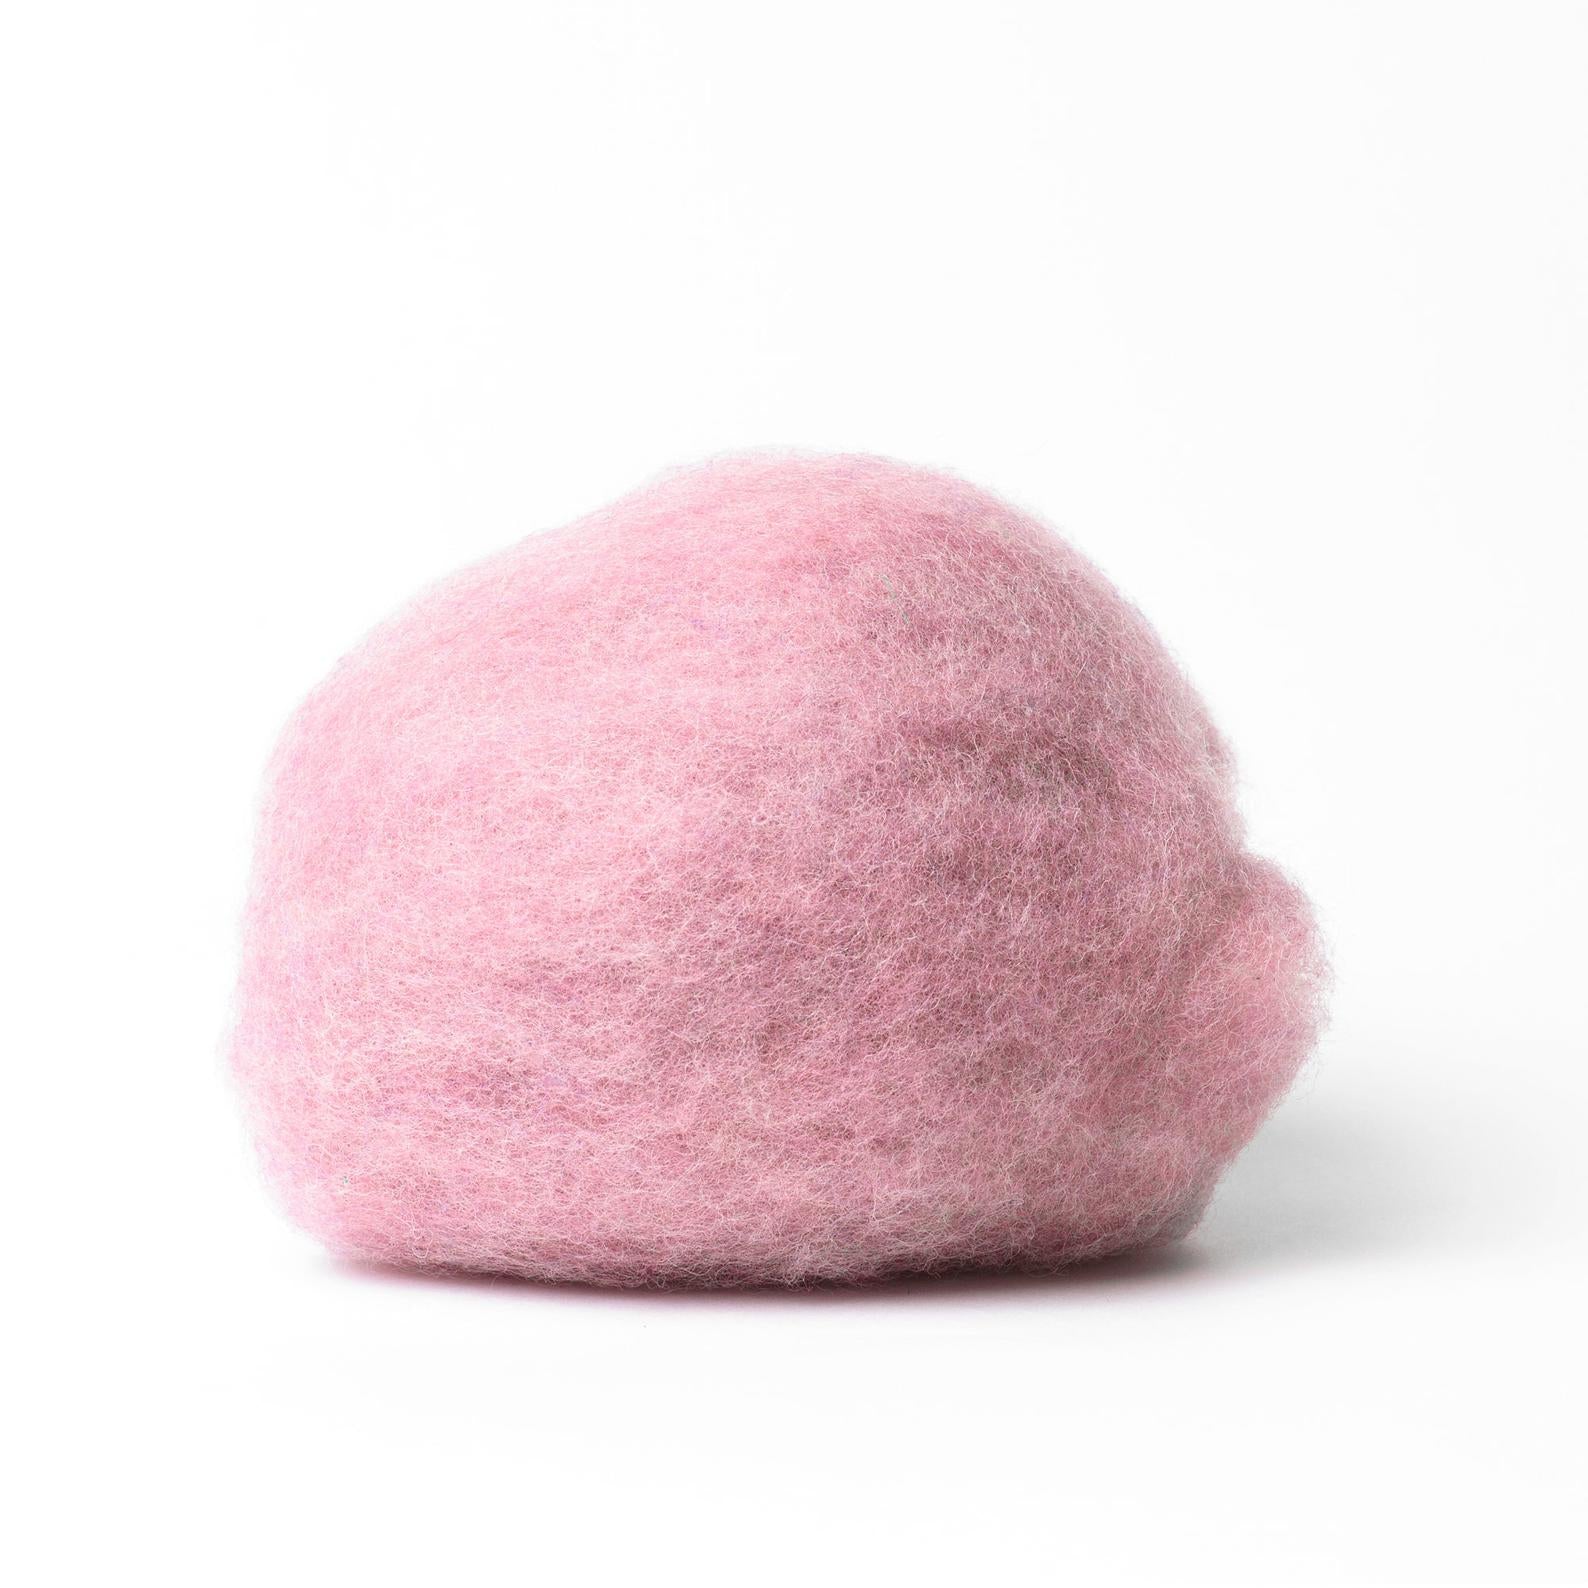 Pastel Blossom Pink Wool Batt for Professional Wet Felting